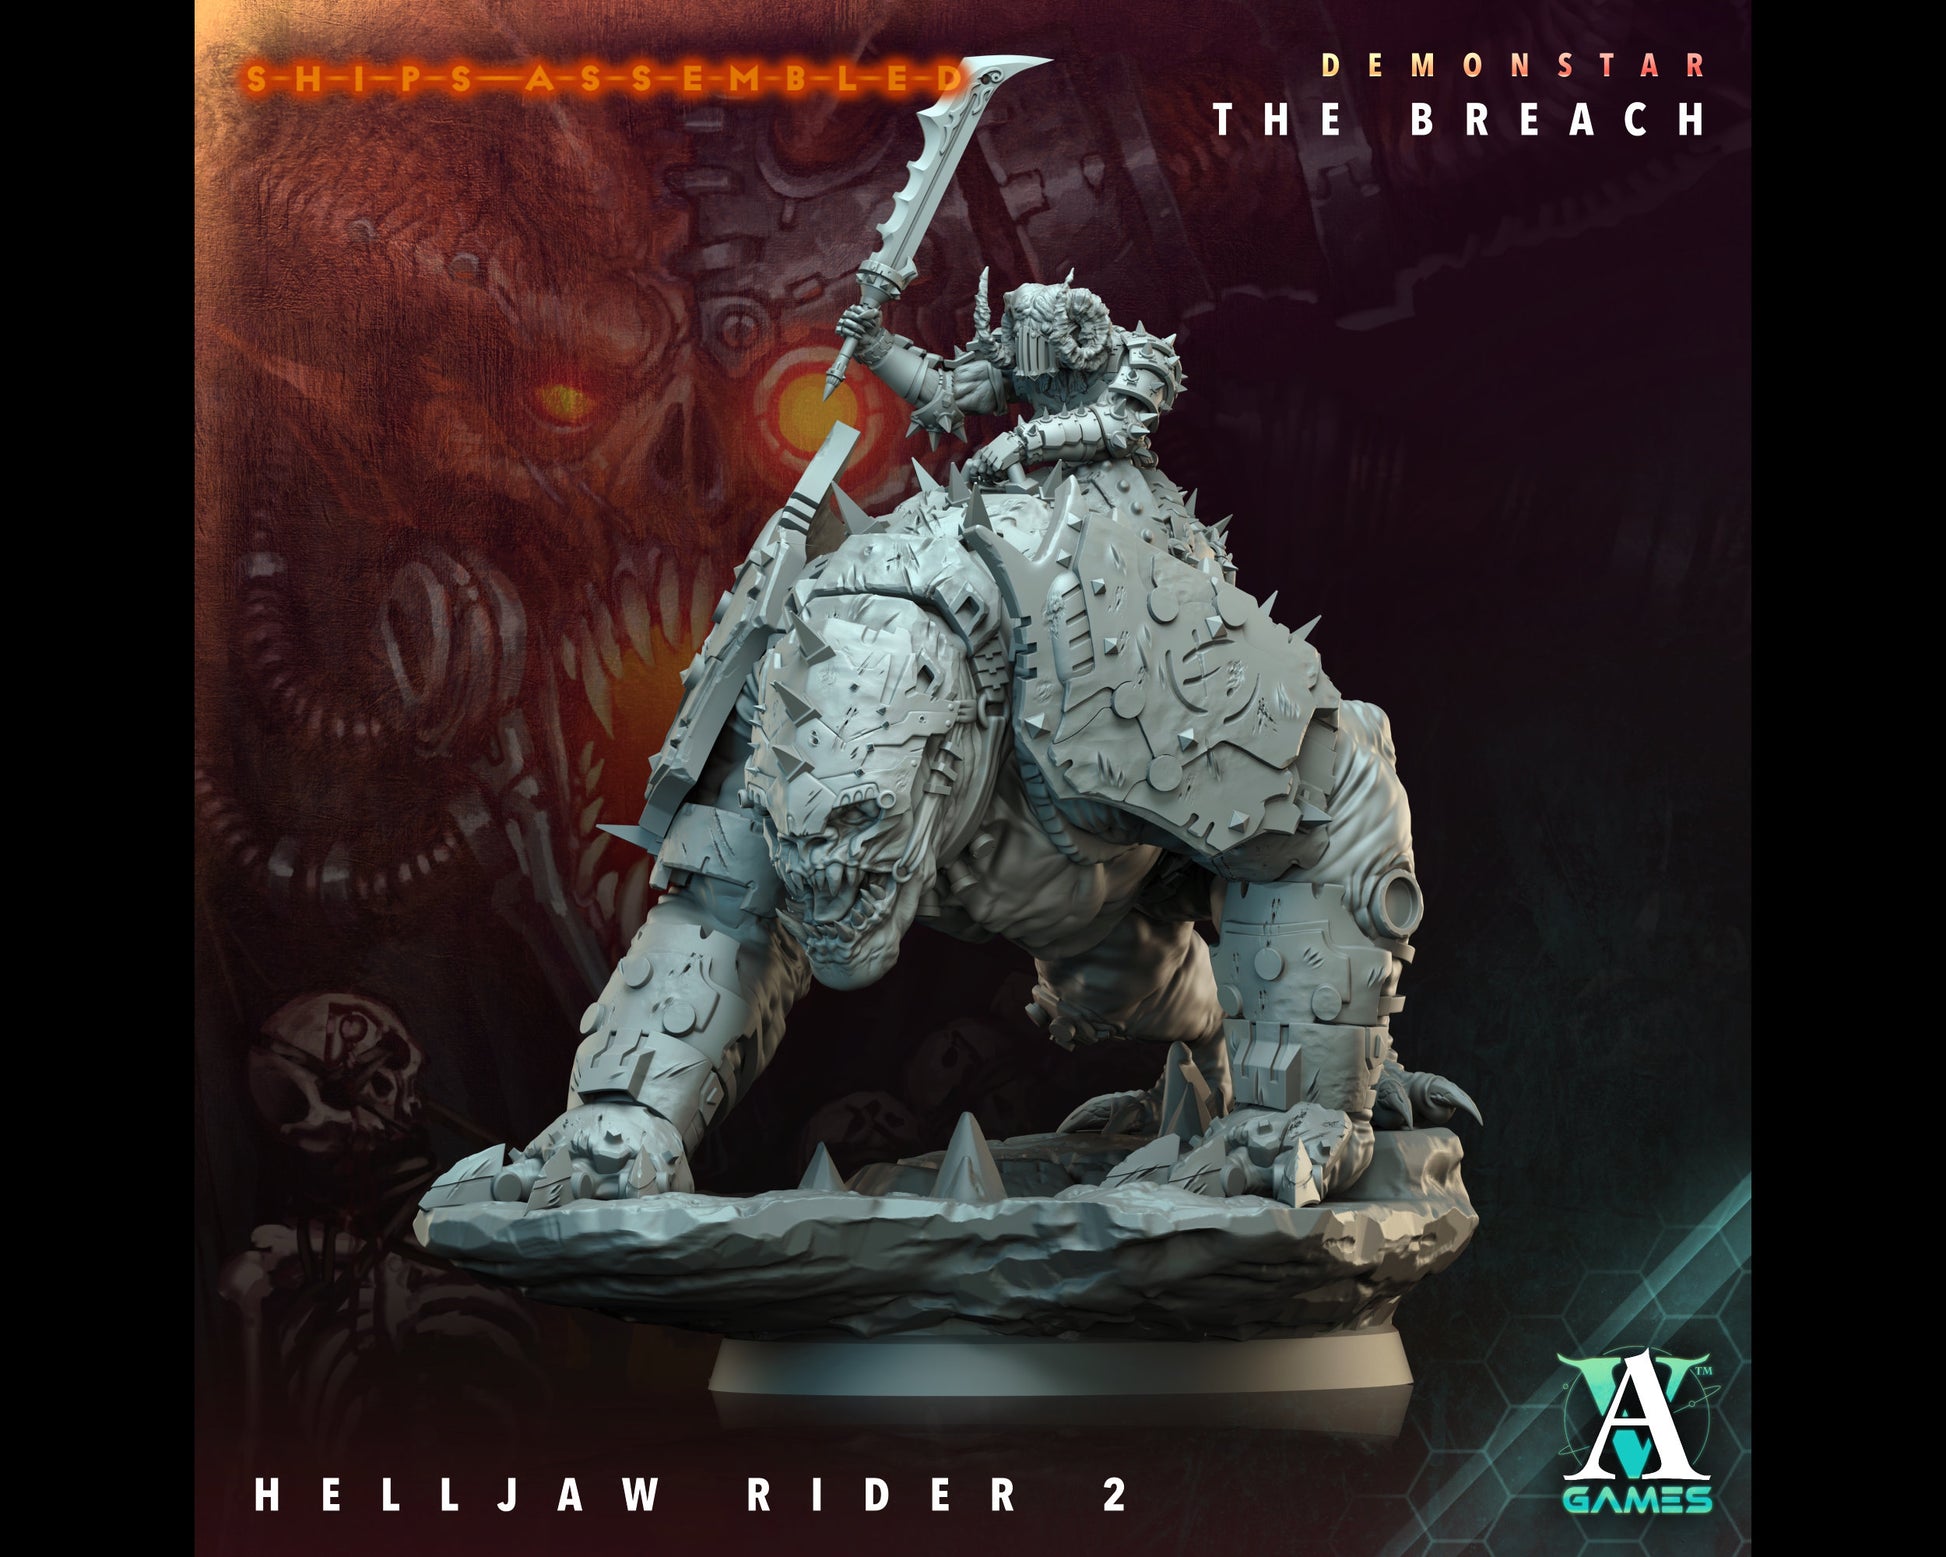 Helljaw Rider 2 - Demonstar: The Breach - Highly Detailed Resin 8k 3D Printed Miniature